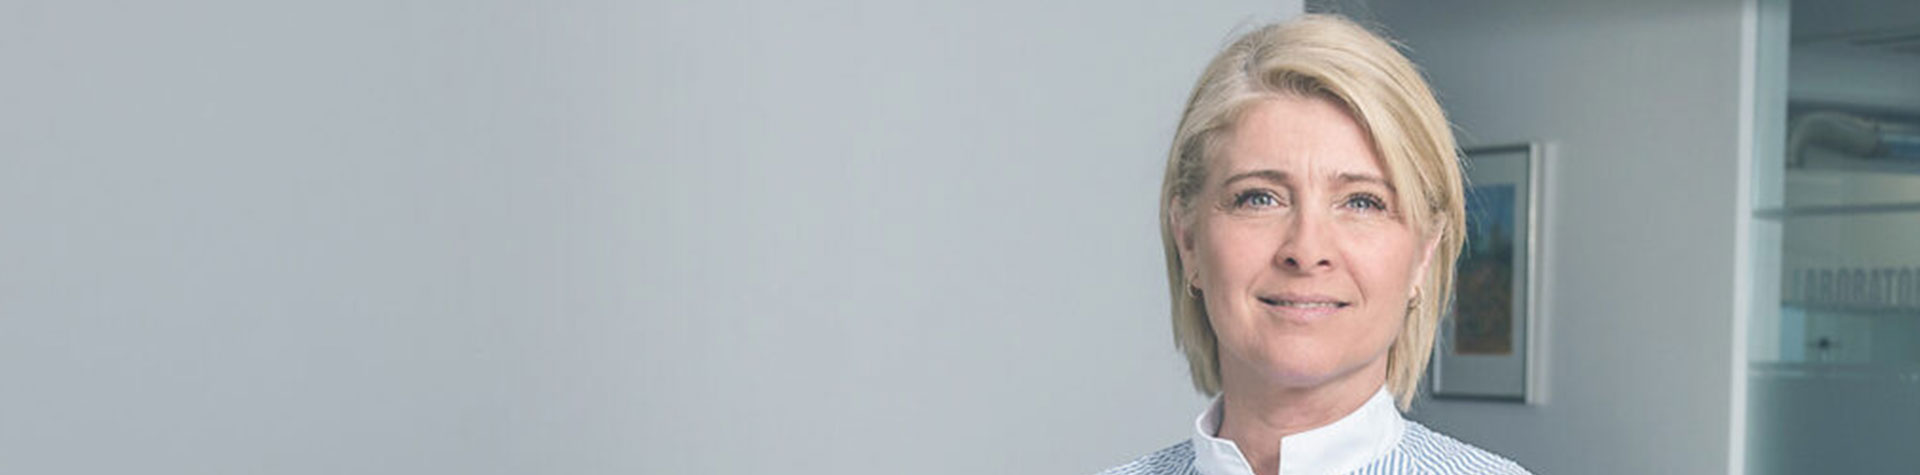 Tandprotetikeren Birgitte Bergerling fejrer 25 års jubilæum.